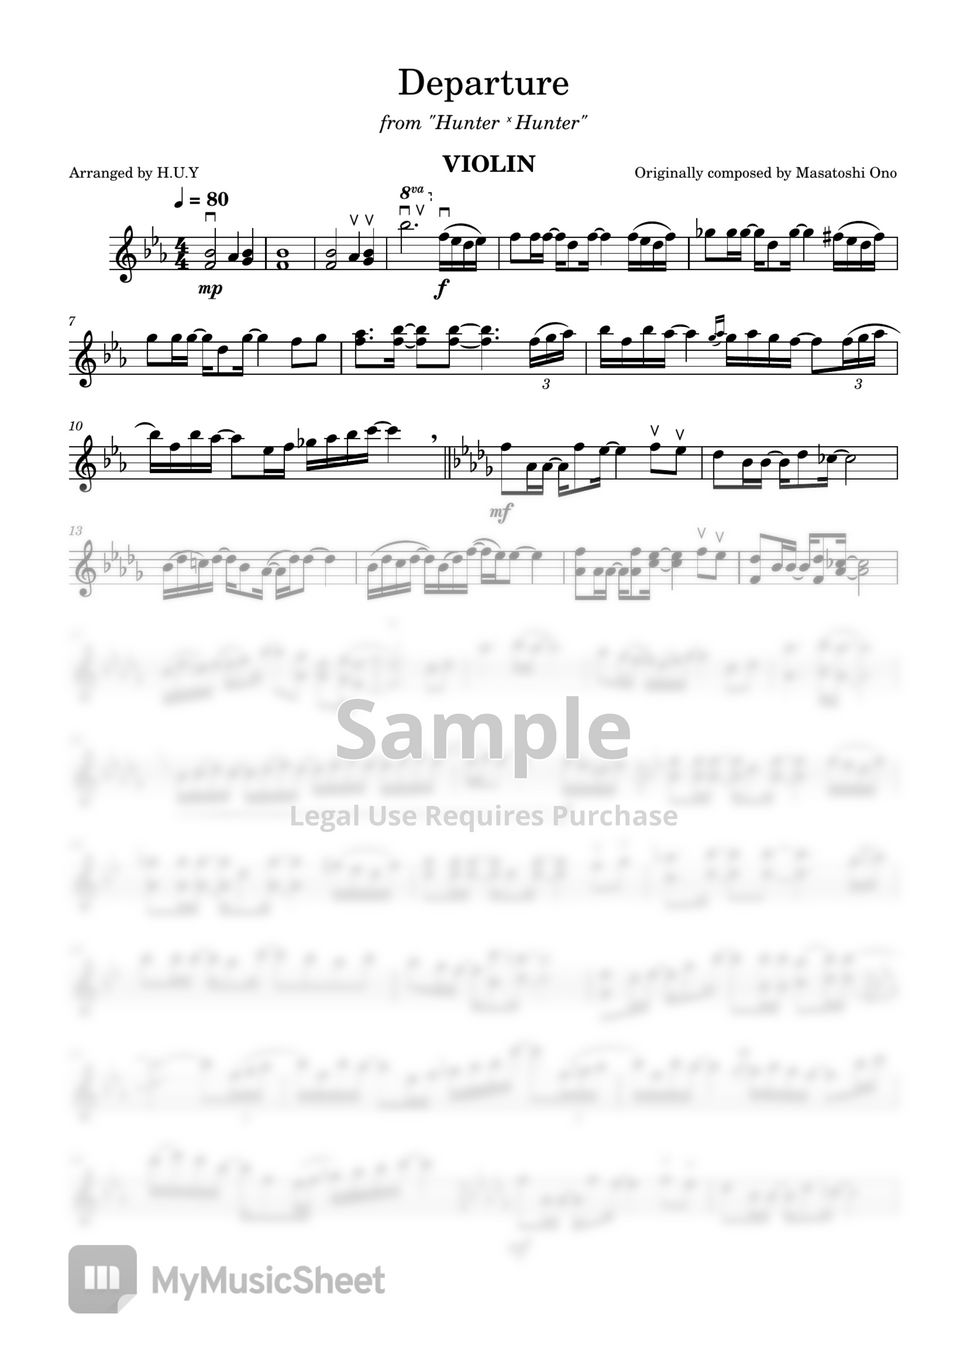 Masatoshi Ono - Departure (Hunter x Hunter) (arranged for Violin) by H.U.Y